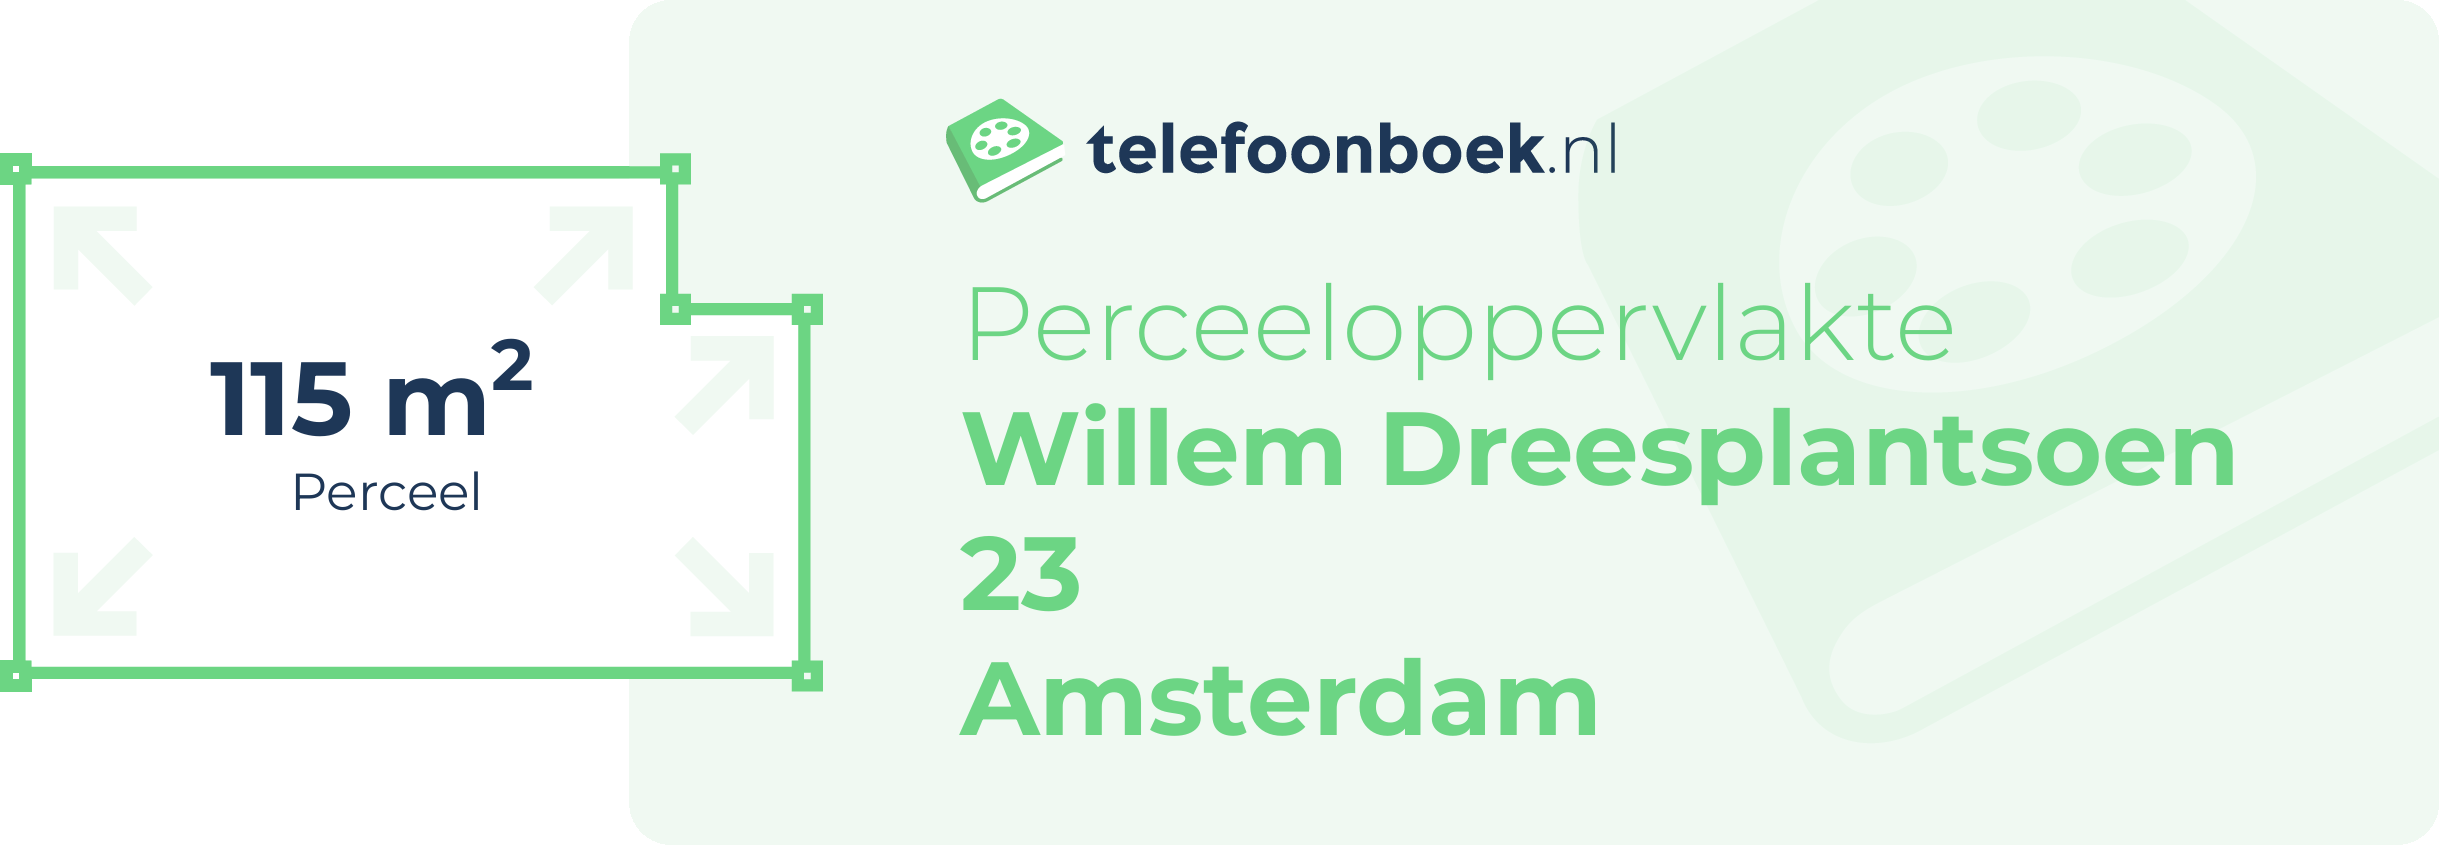 Perceeloppervlakte Willem Dreesplantsoen 23 Amsterdam